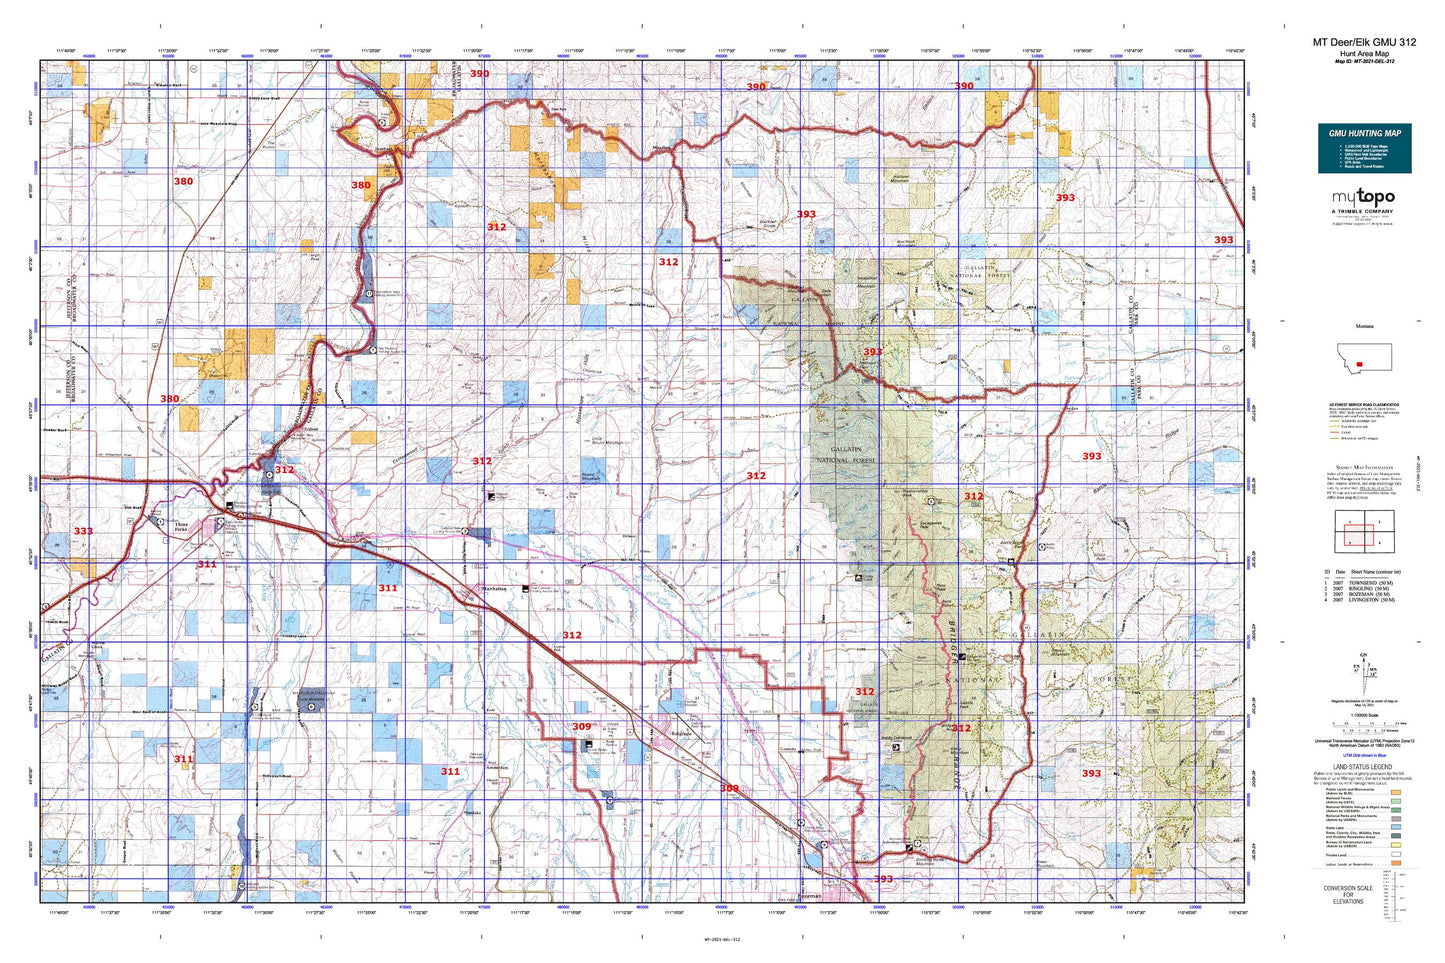 Montana Deer/Elk GMU 312 Map Image